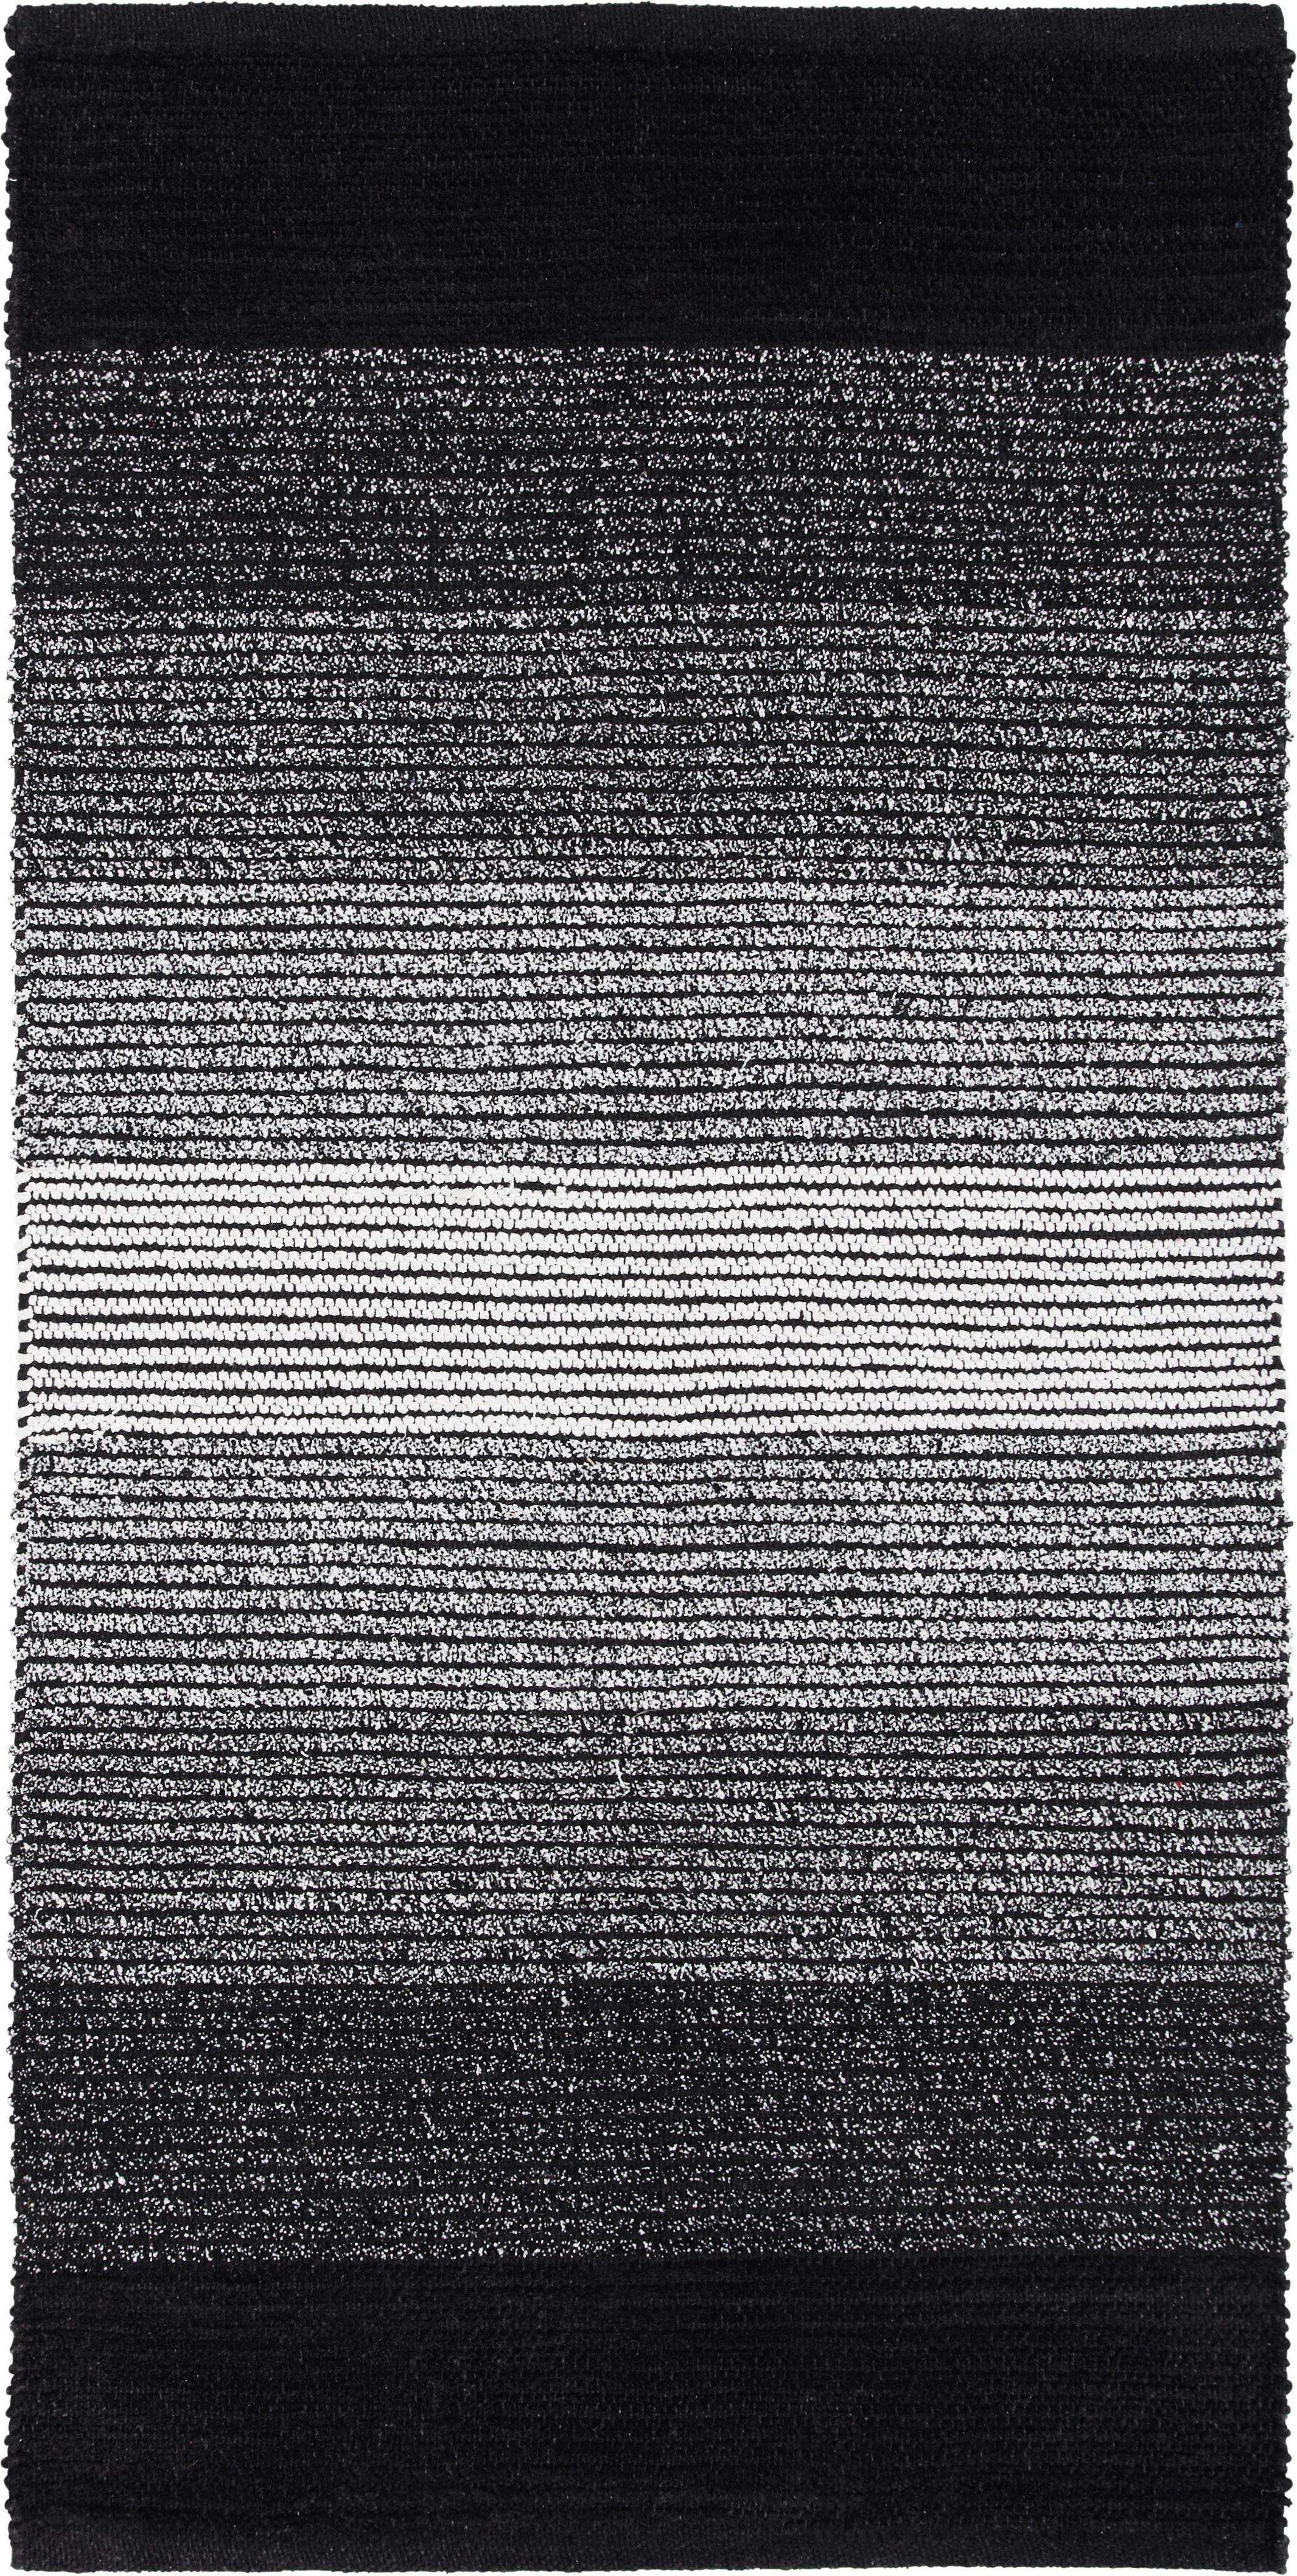 Hadrový Koberec Malto - černá, Moderní, textil (70/140cm) - Modern Living